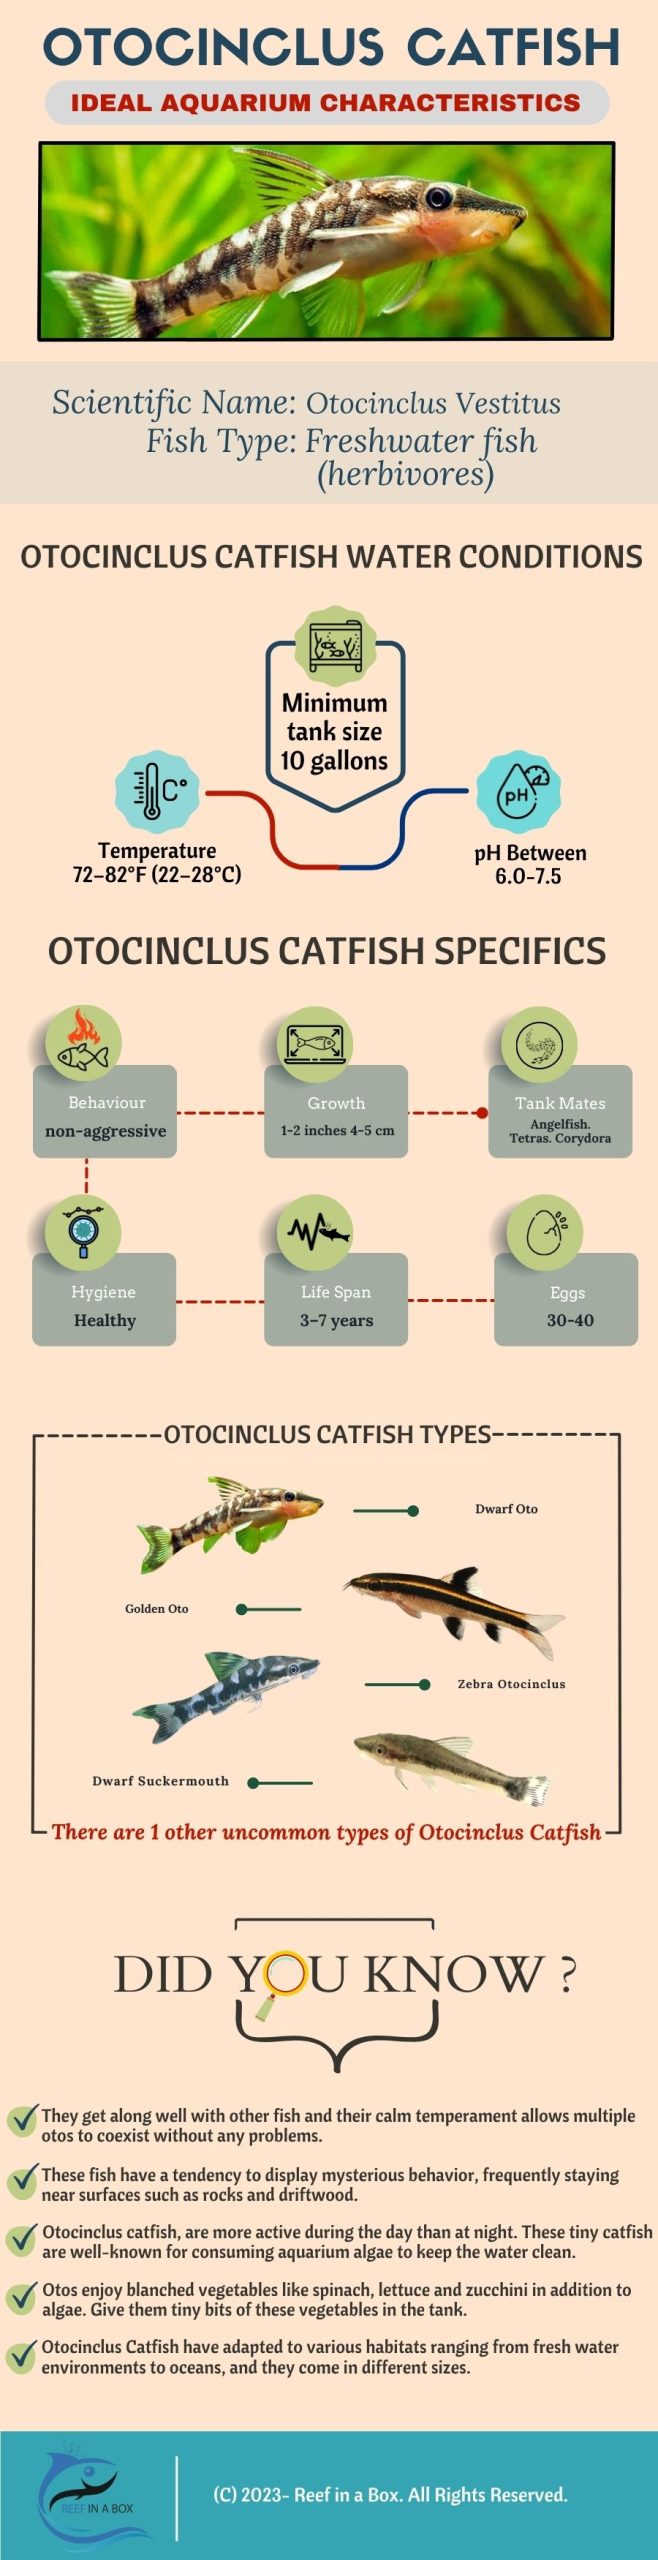 Otocinclus Catfish: An Algae Eater